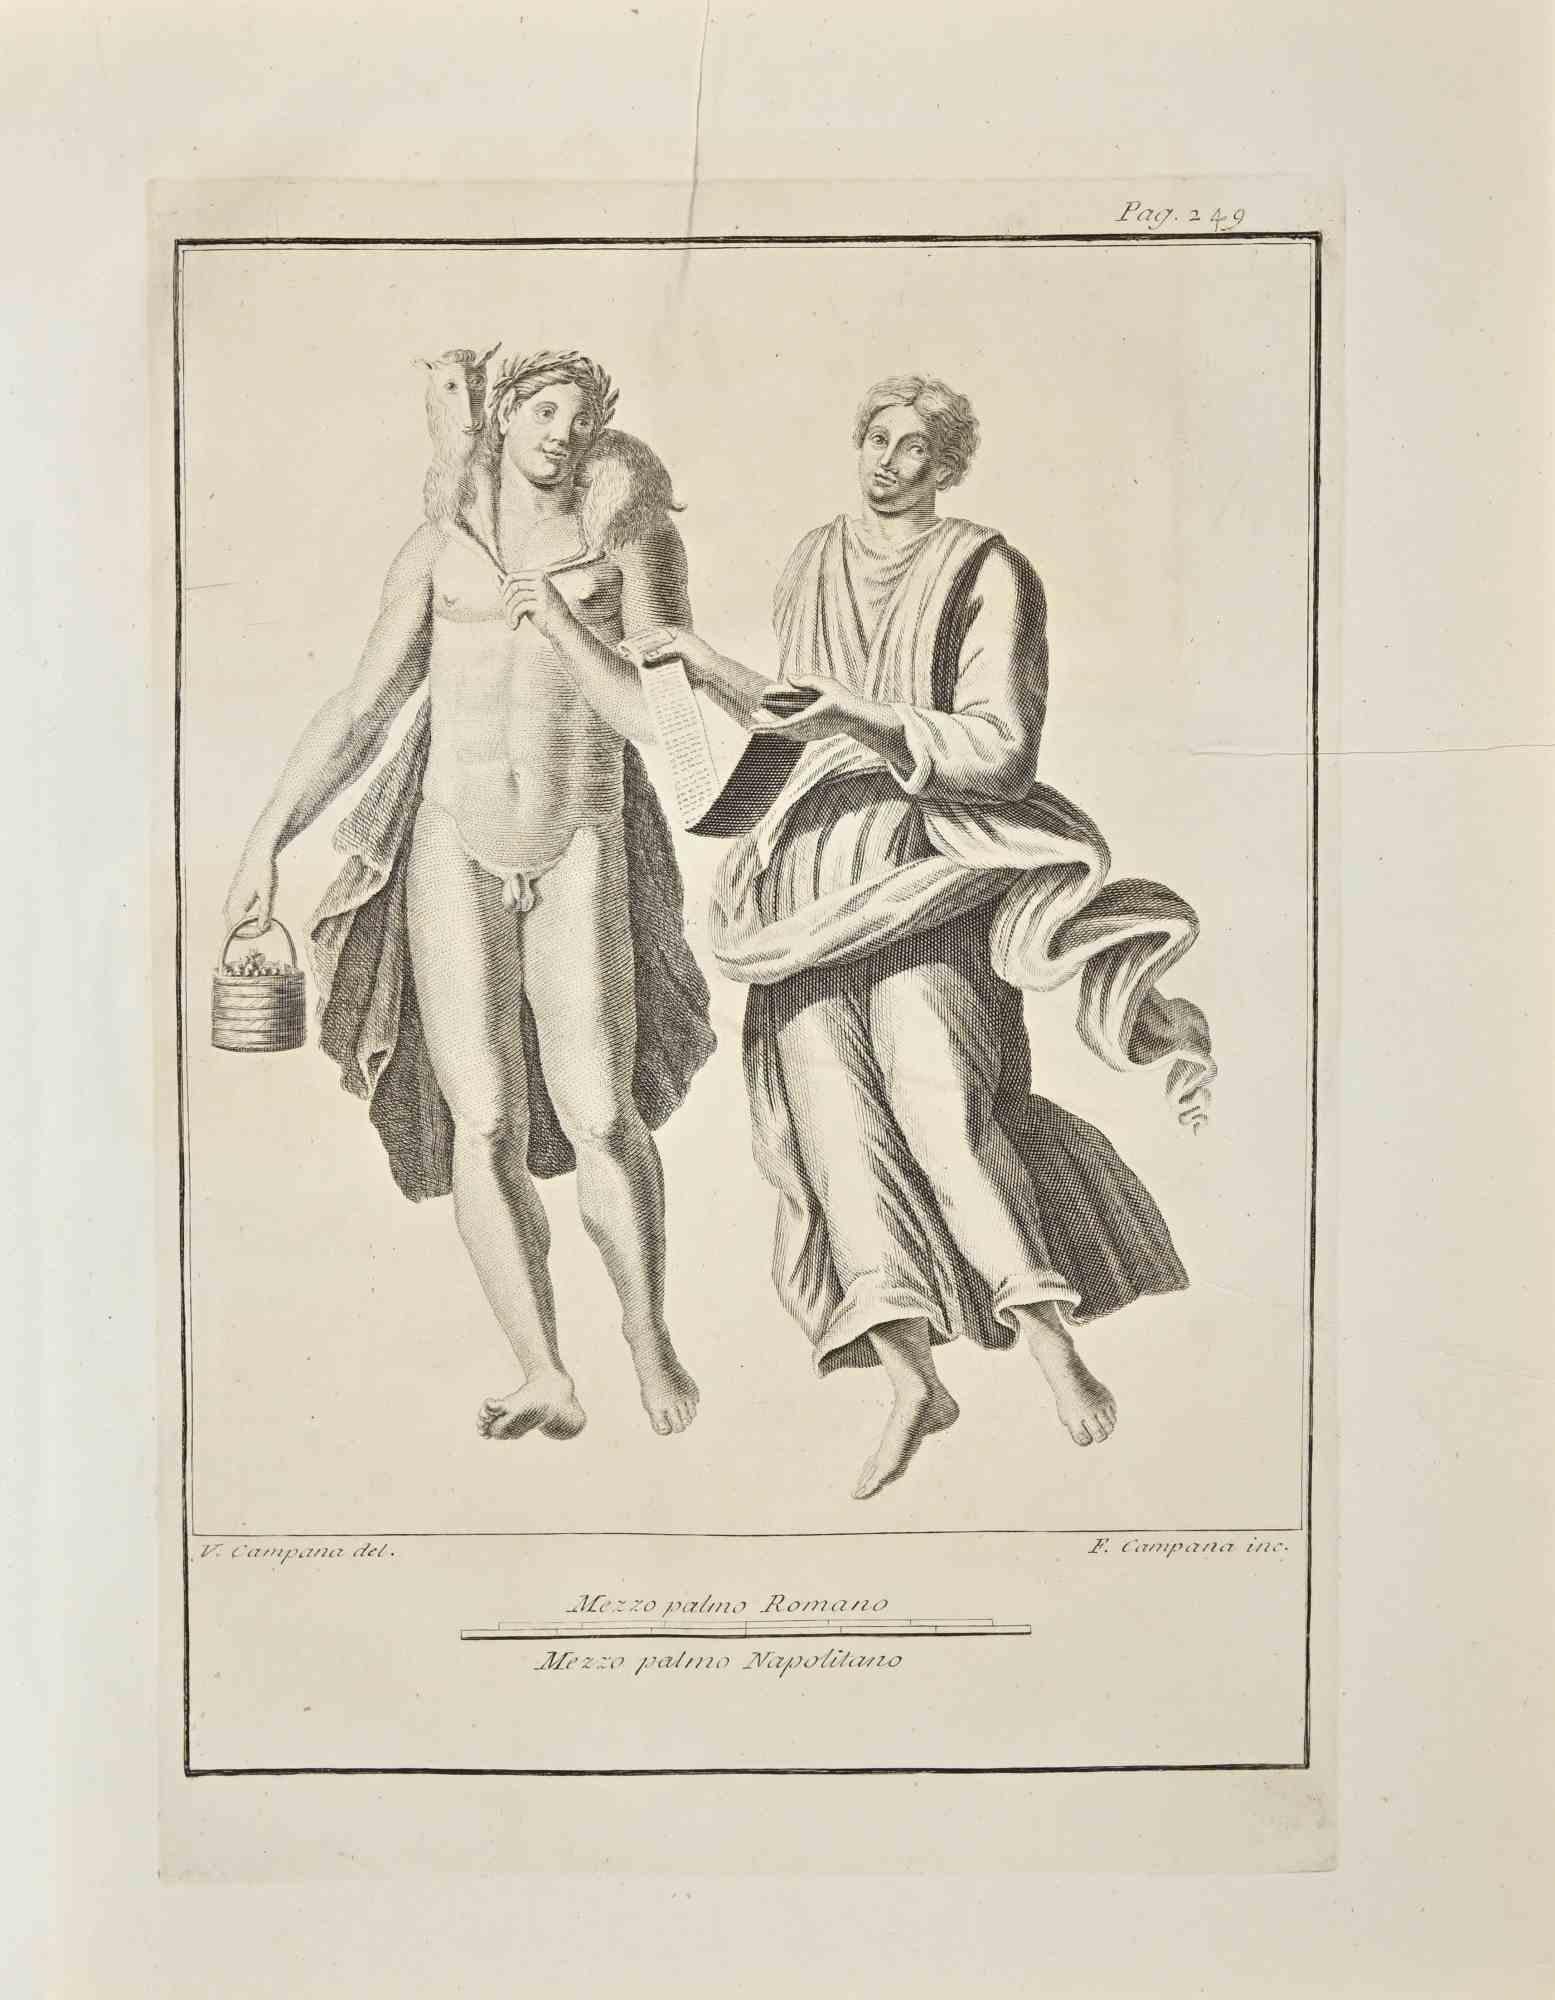 Ferdinando Campana Figurative Print - Ancient Roman Scene - Etching F. Campana - 18th Century